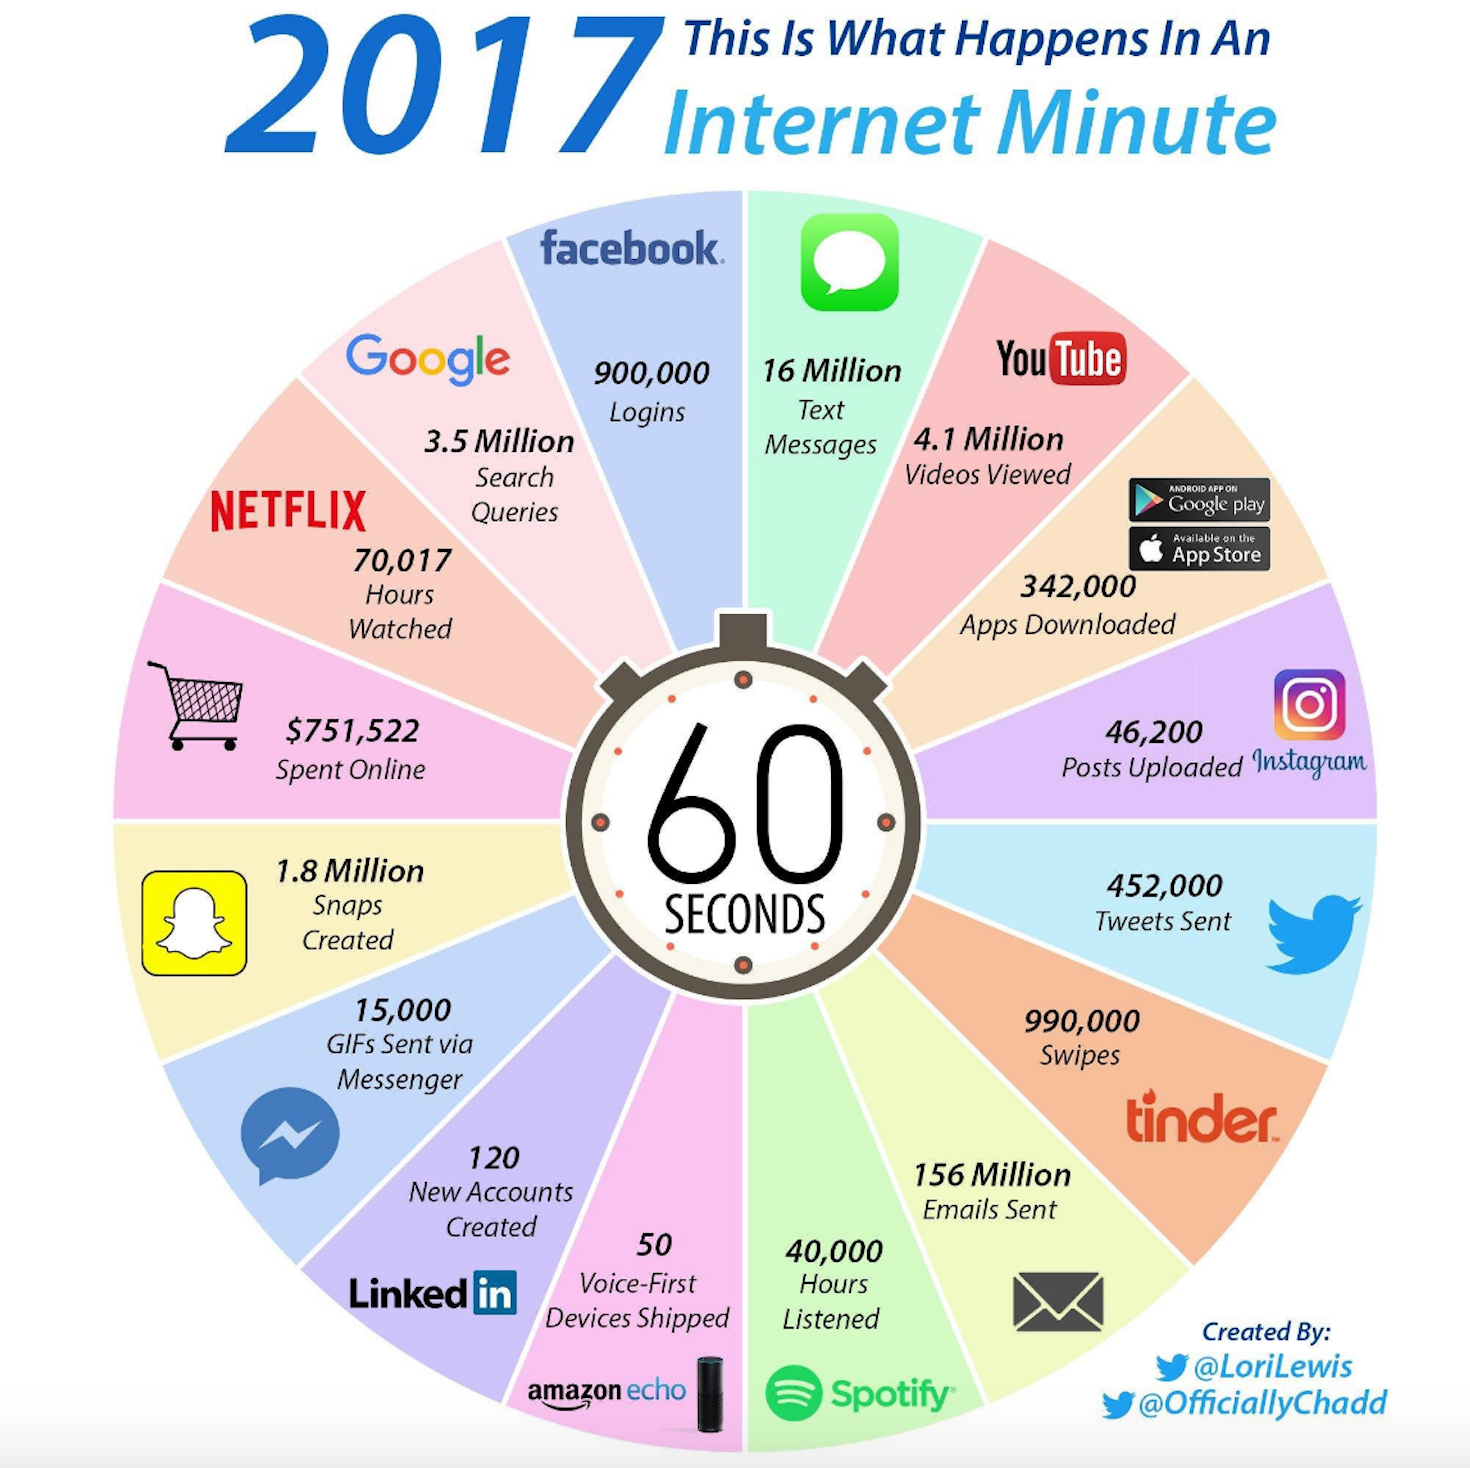 Internet Minute in 2017